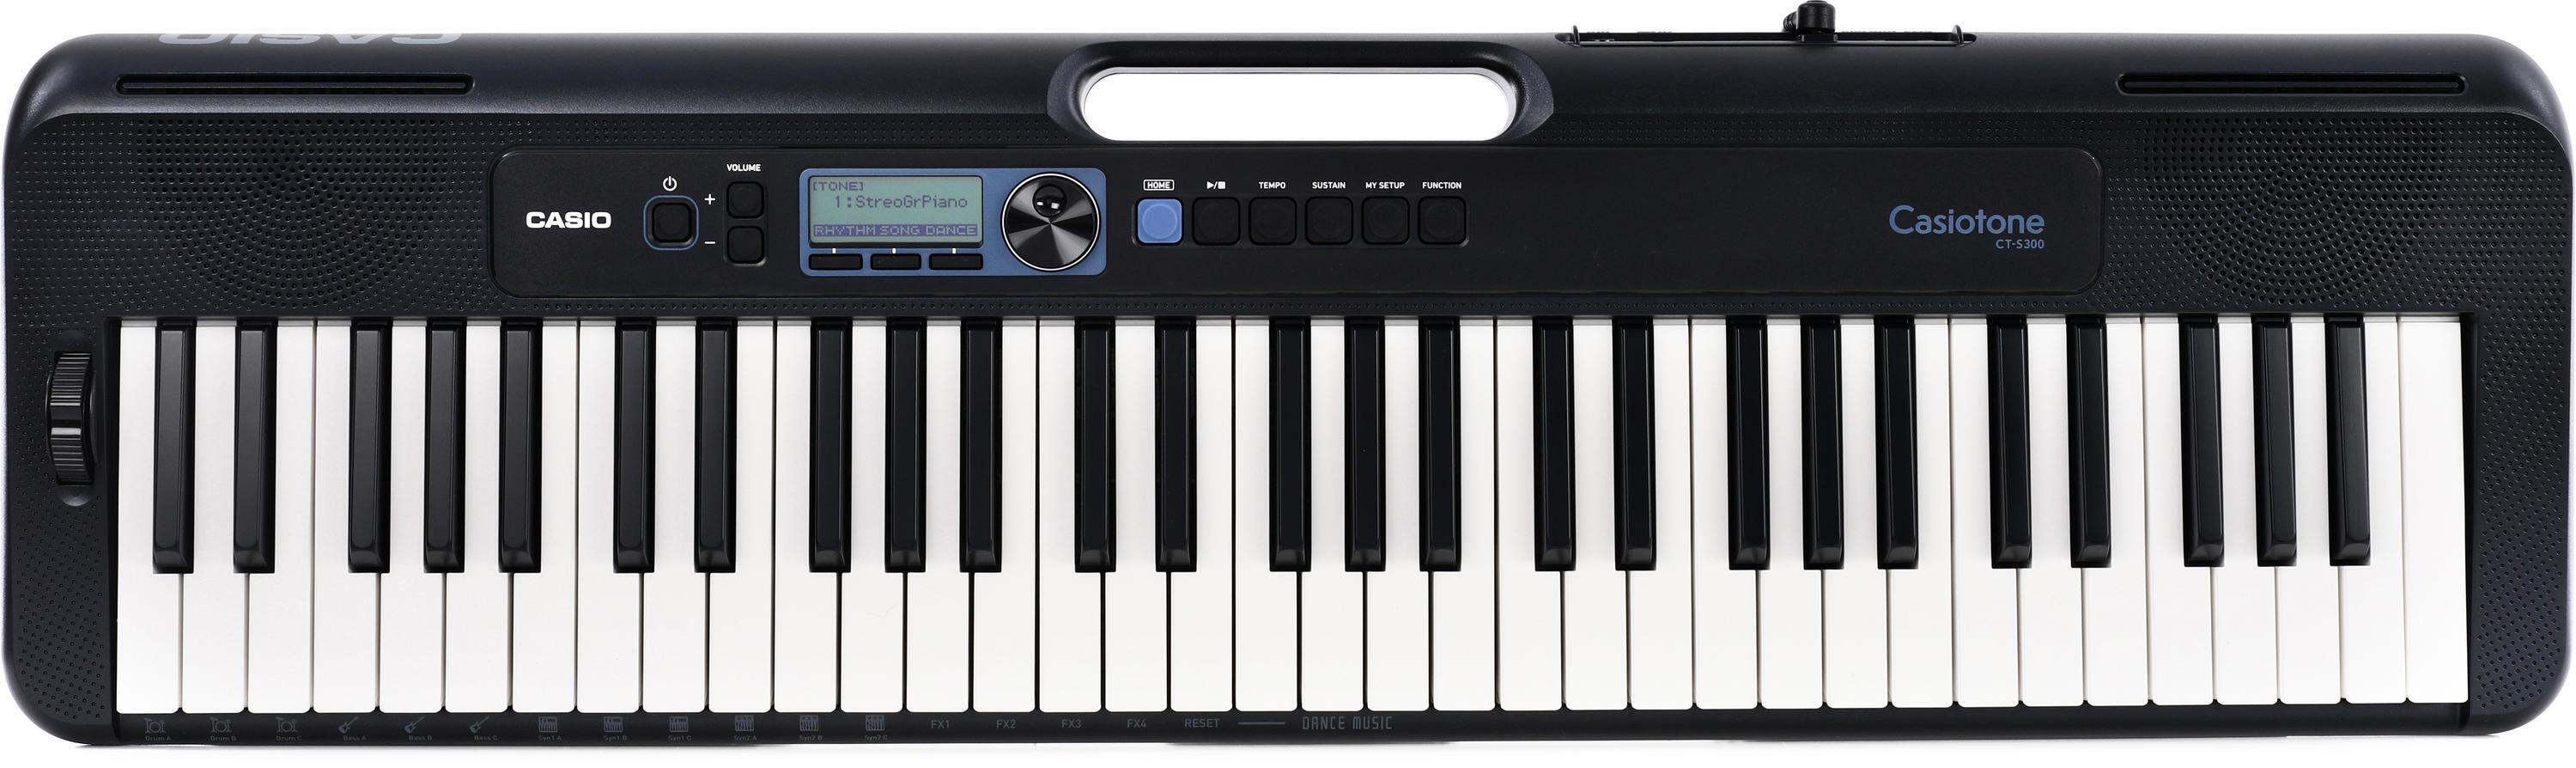 Bundled Item: Casio Casiotone CT-S300 61-key Portable Arranger Keyboard